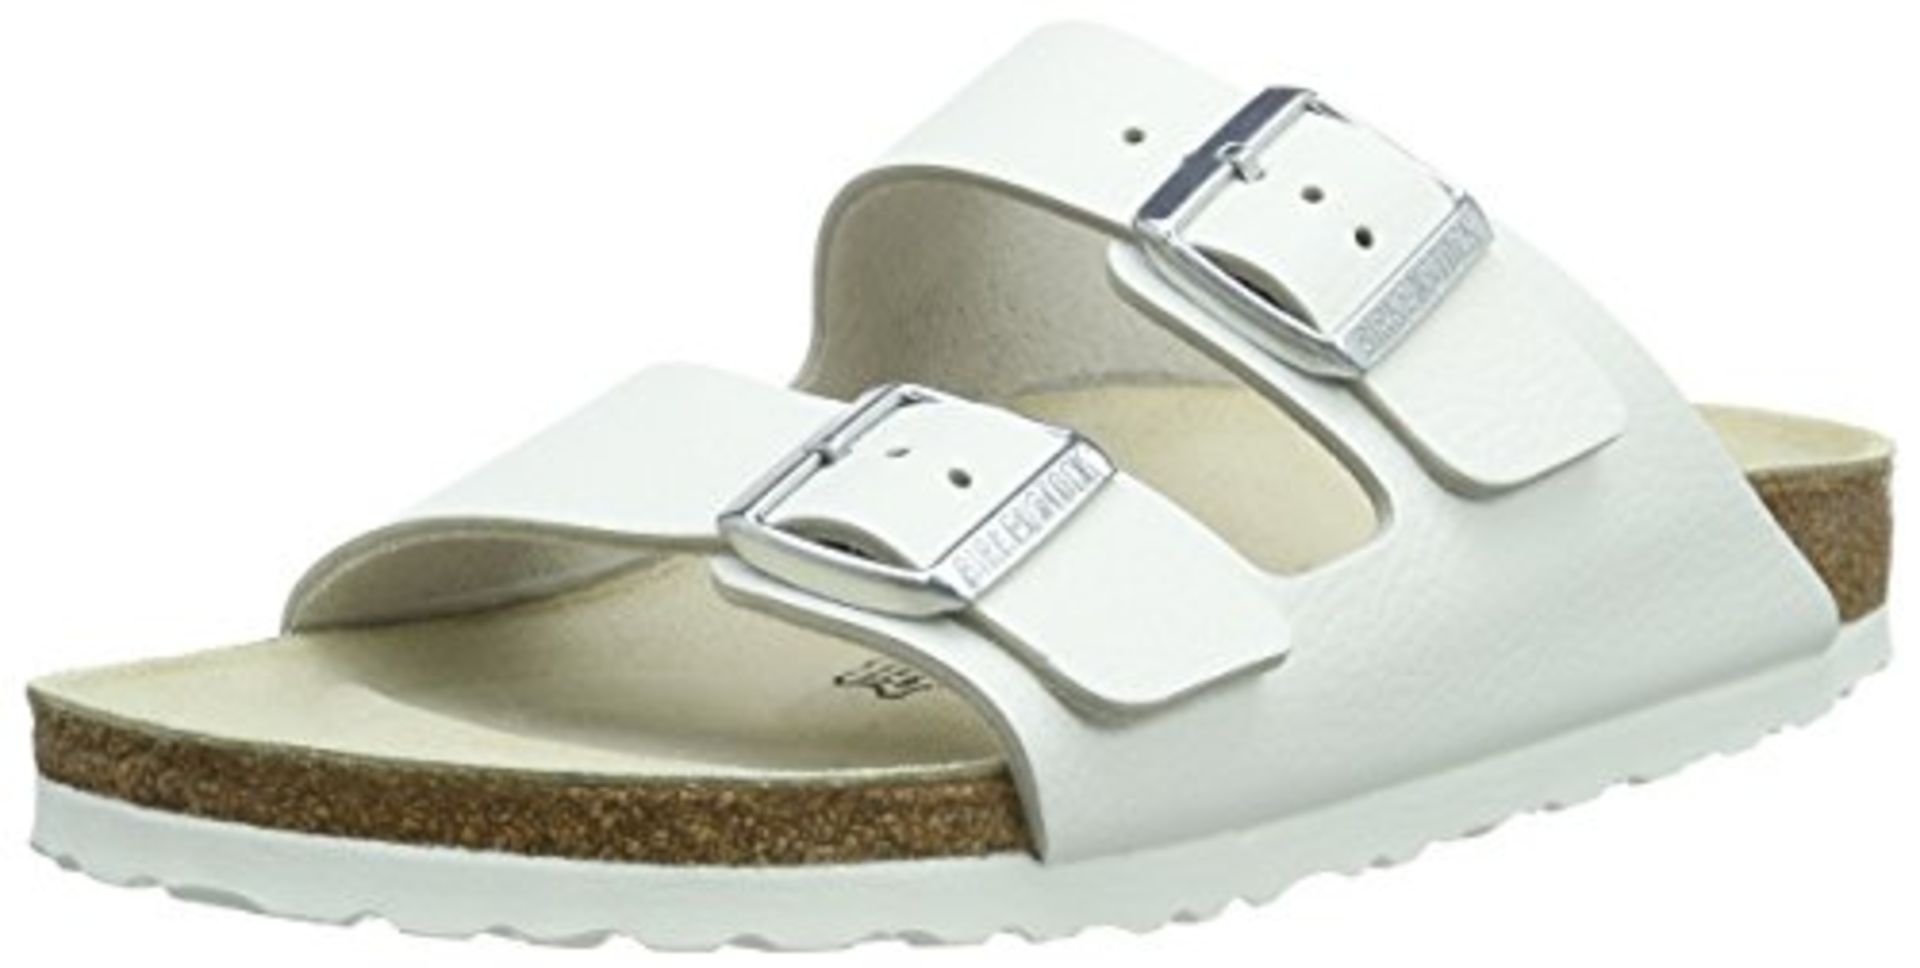 Birkenstock Unisex Adults' Arizona Slim Sandals, White (Weiss), 10.5 UK (Slim) (45 EU) 10.5 UK Unise